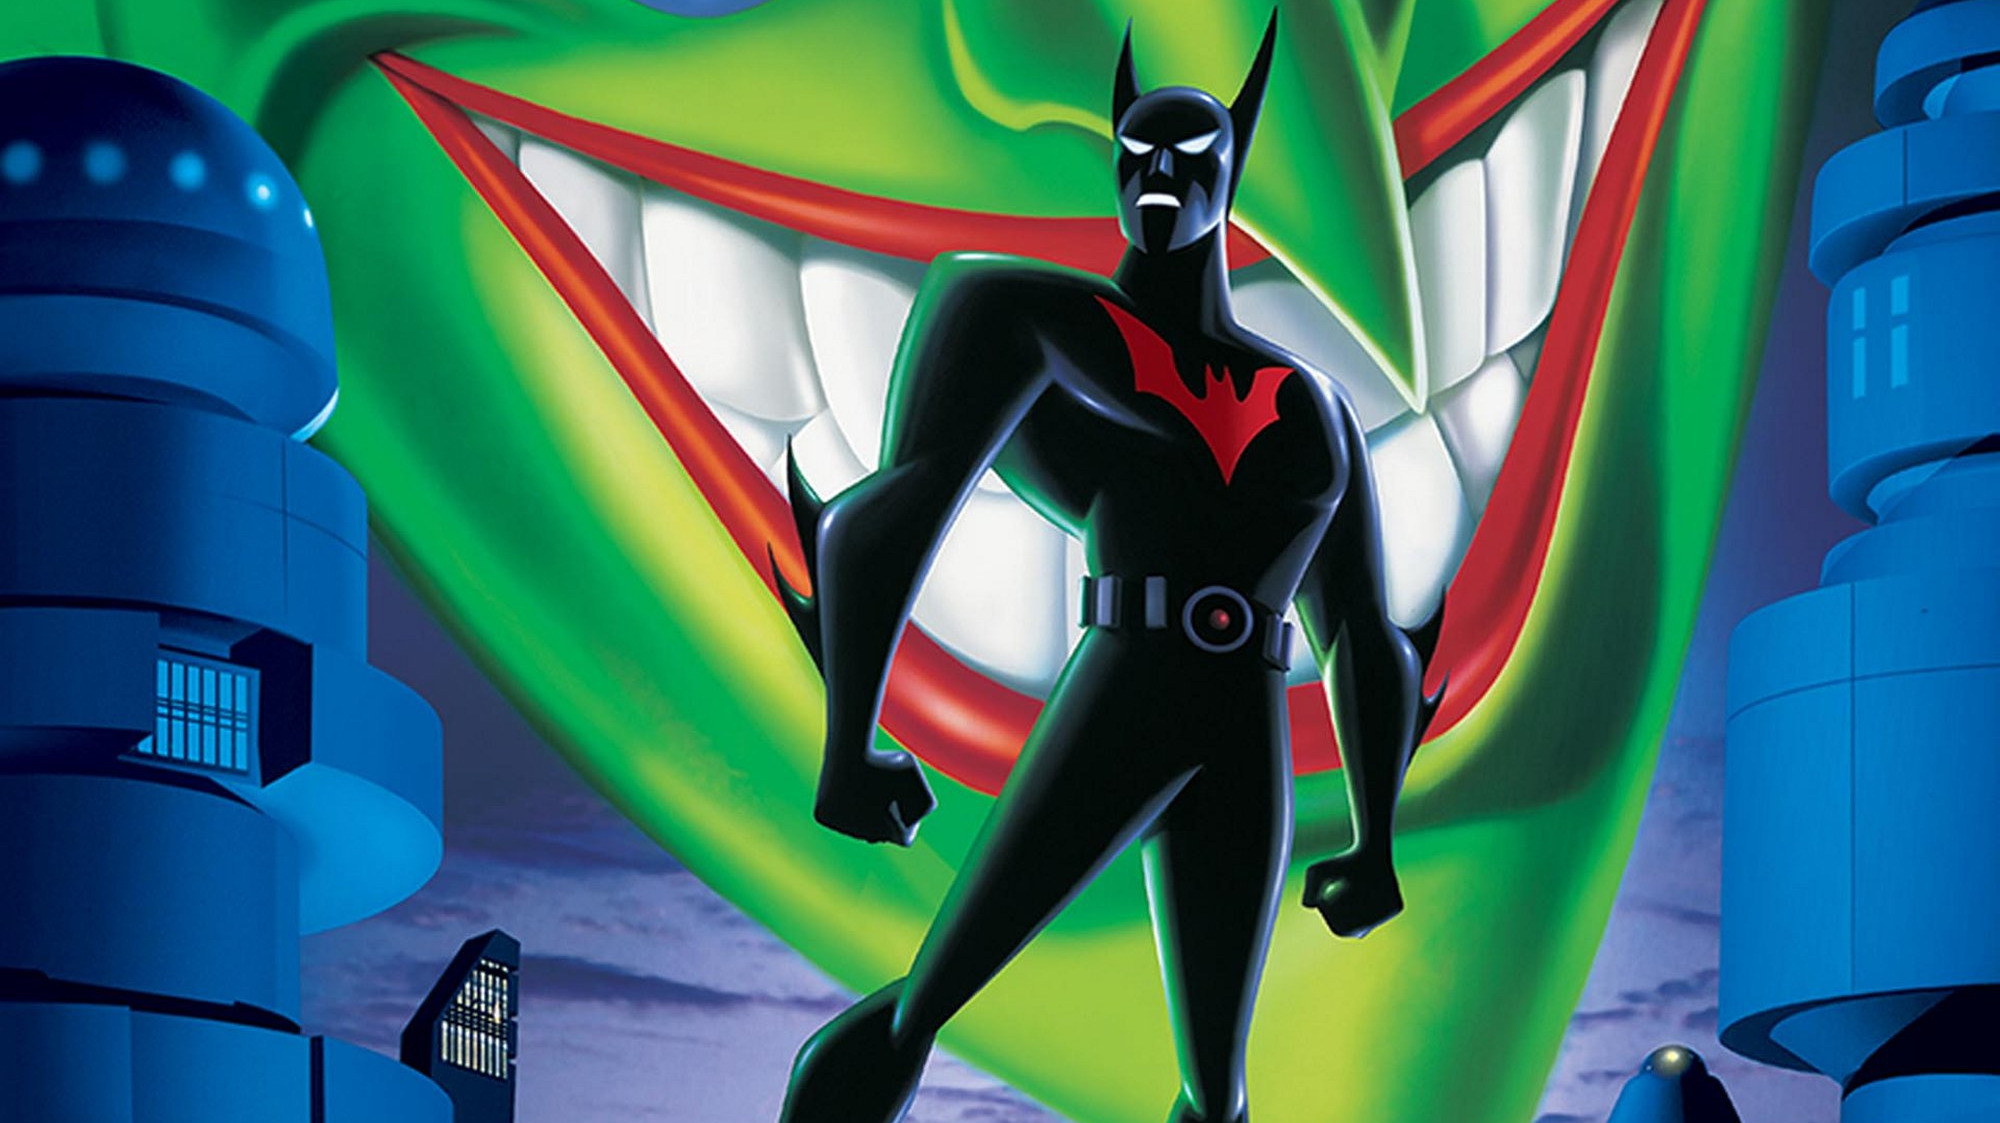 Movie Batman Beyond: Return of the Joker HD Wallpaper | Background Image